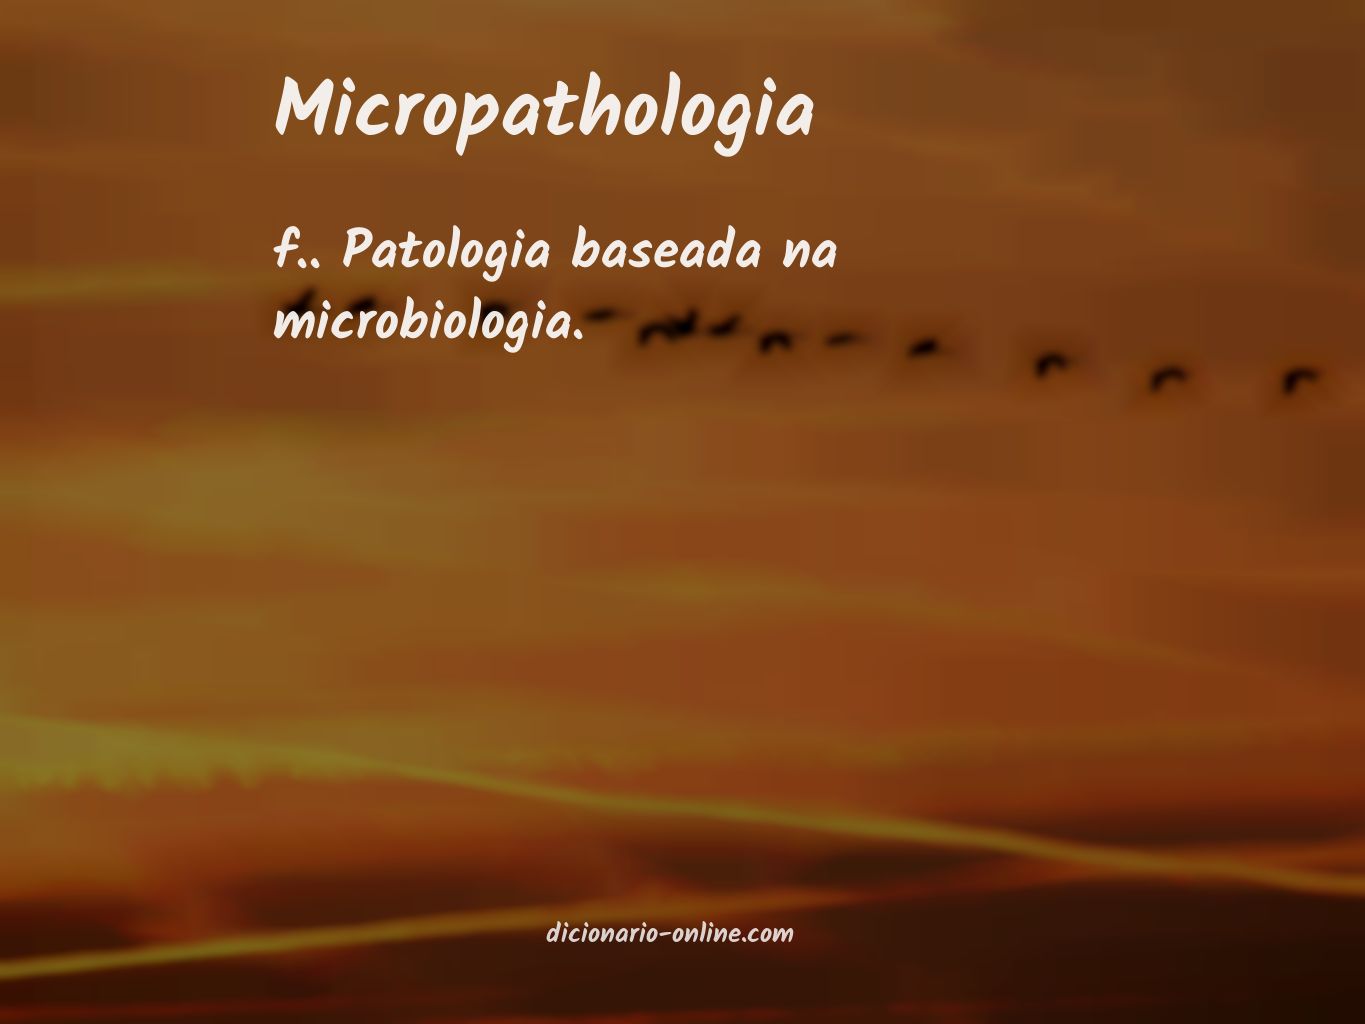 Significado de micropathologia